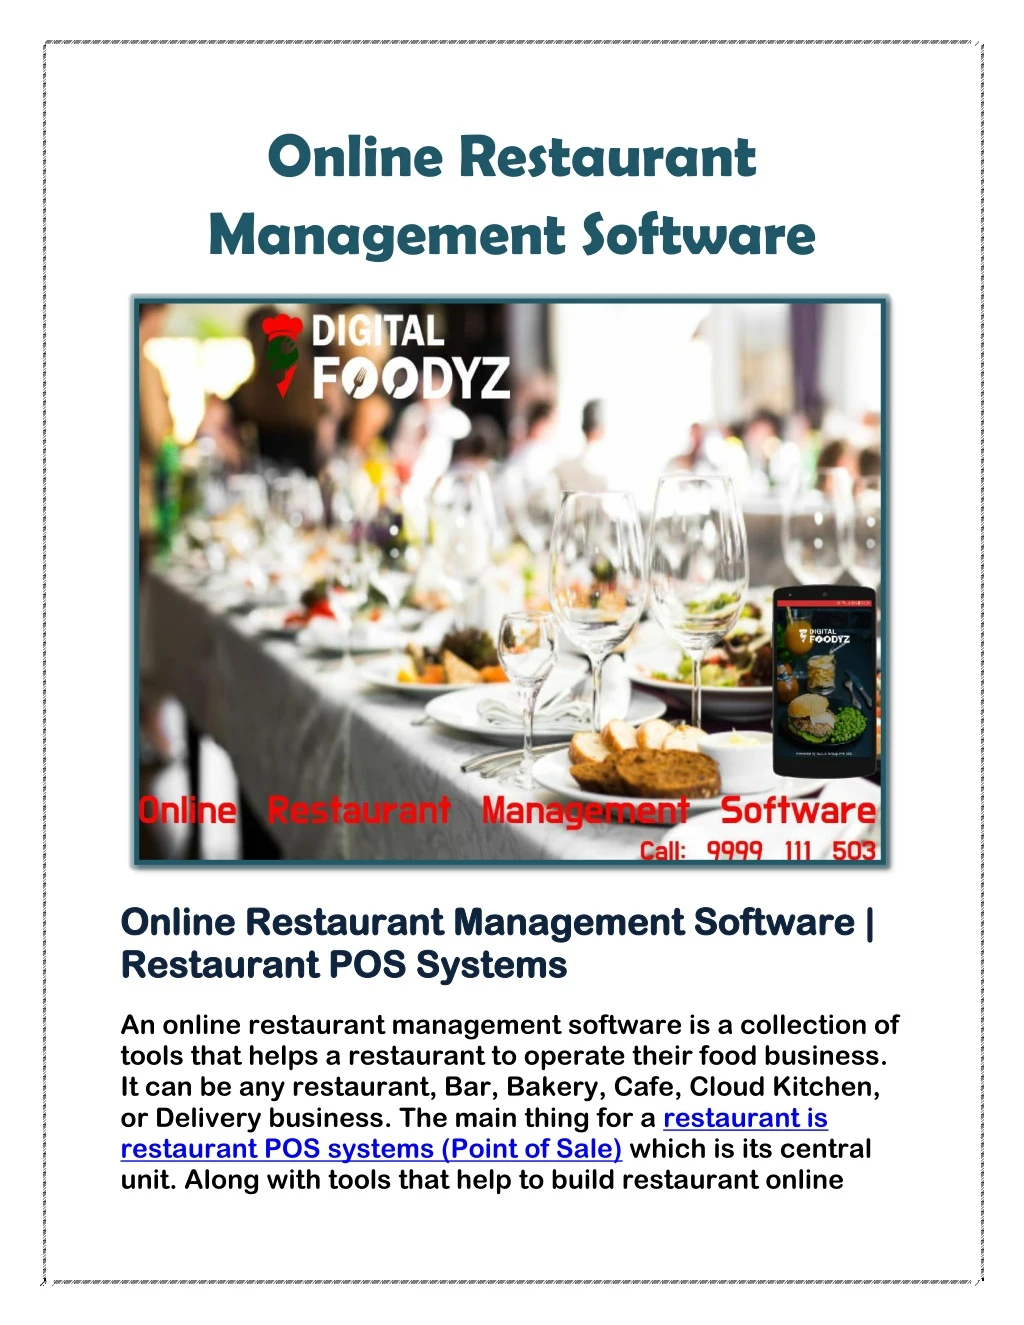 online restaurant management software